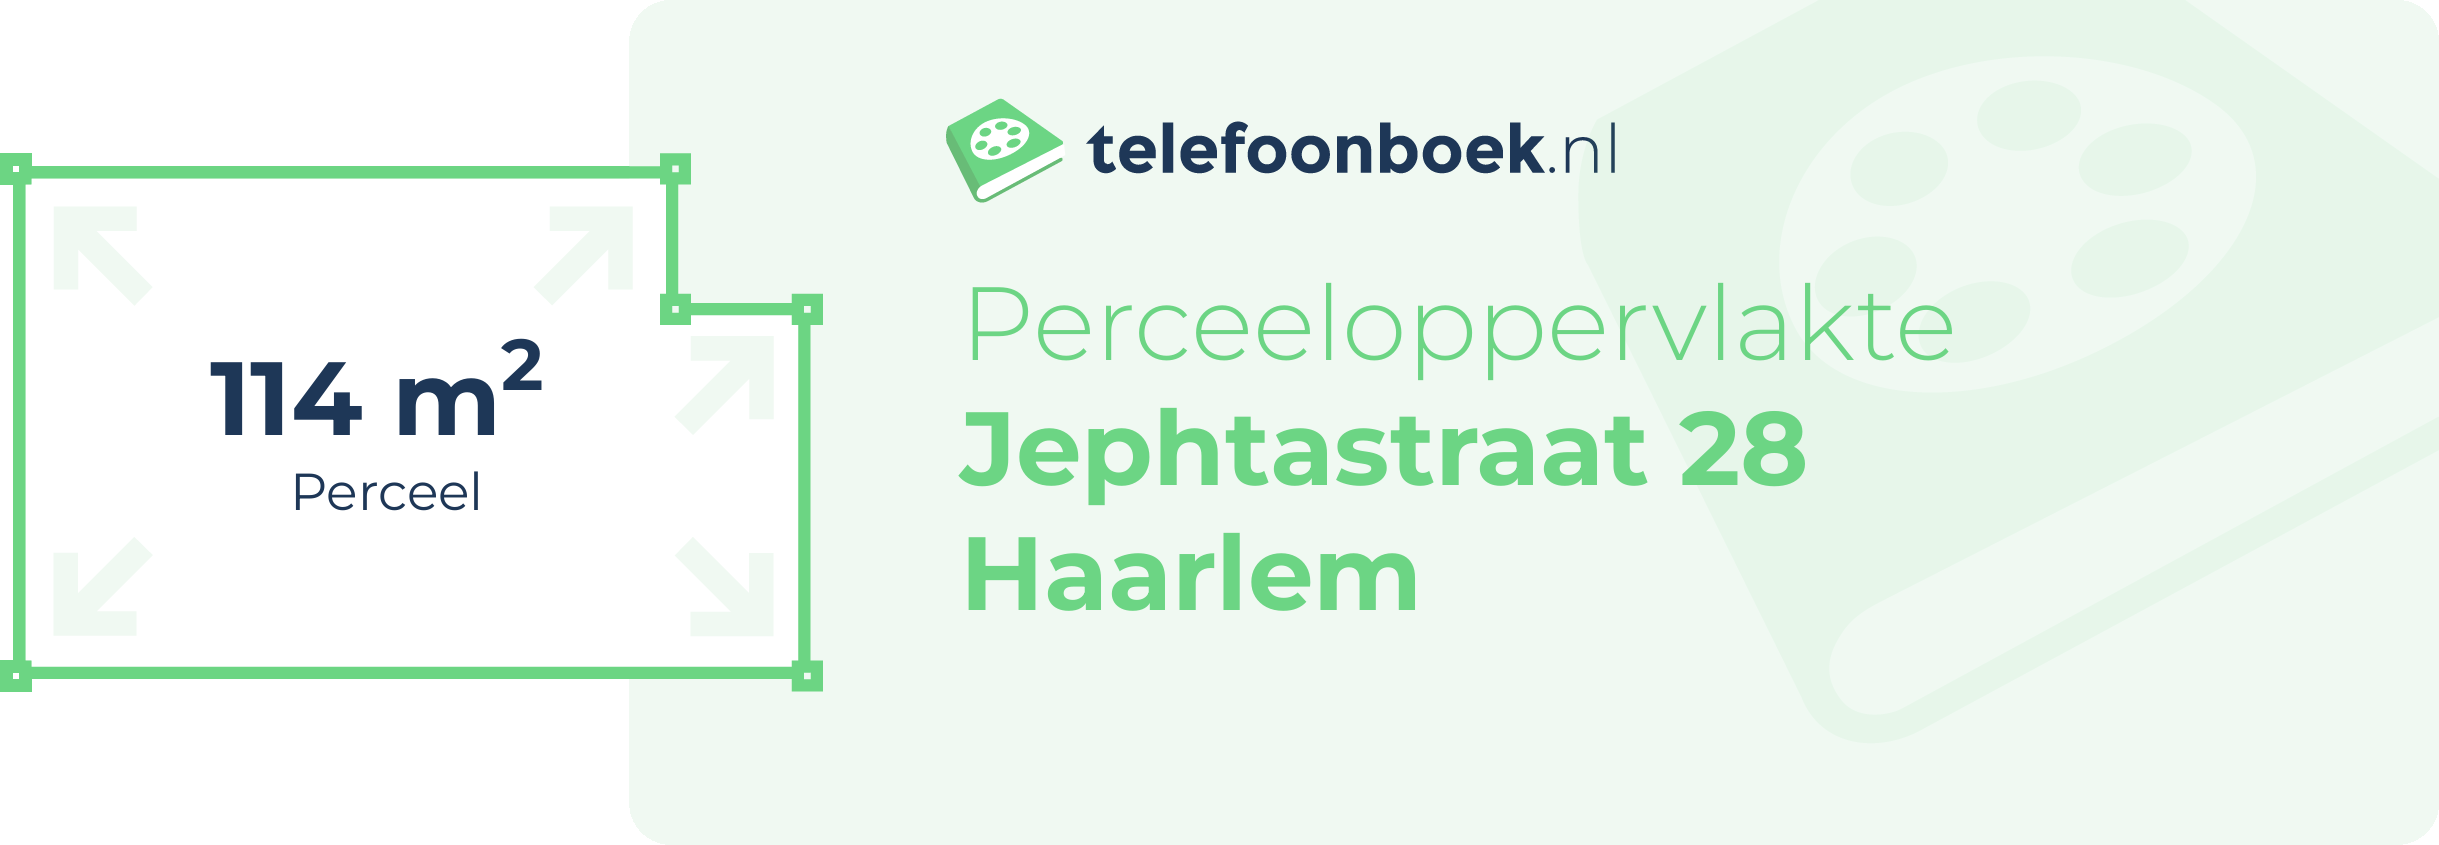 Perceeloppervlakte Jephtastraat 28 Haarlem